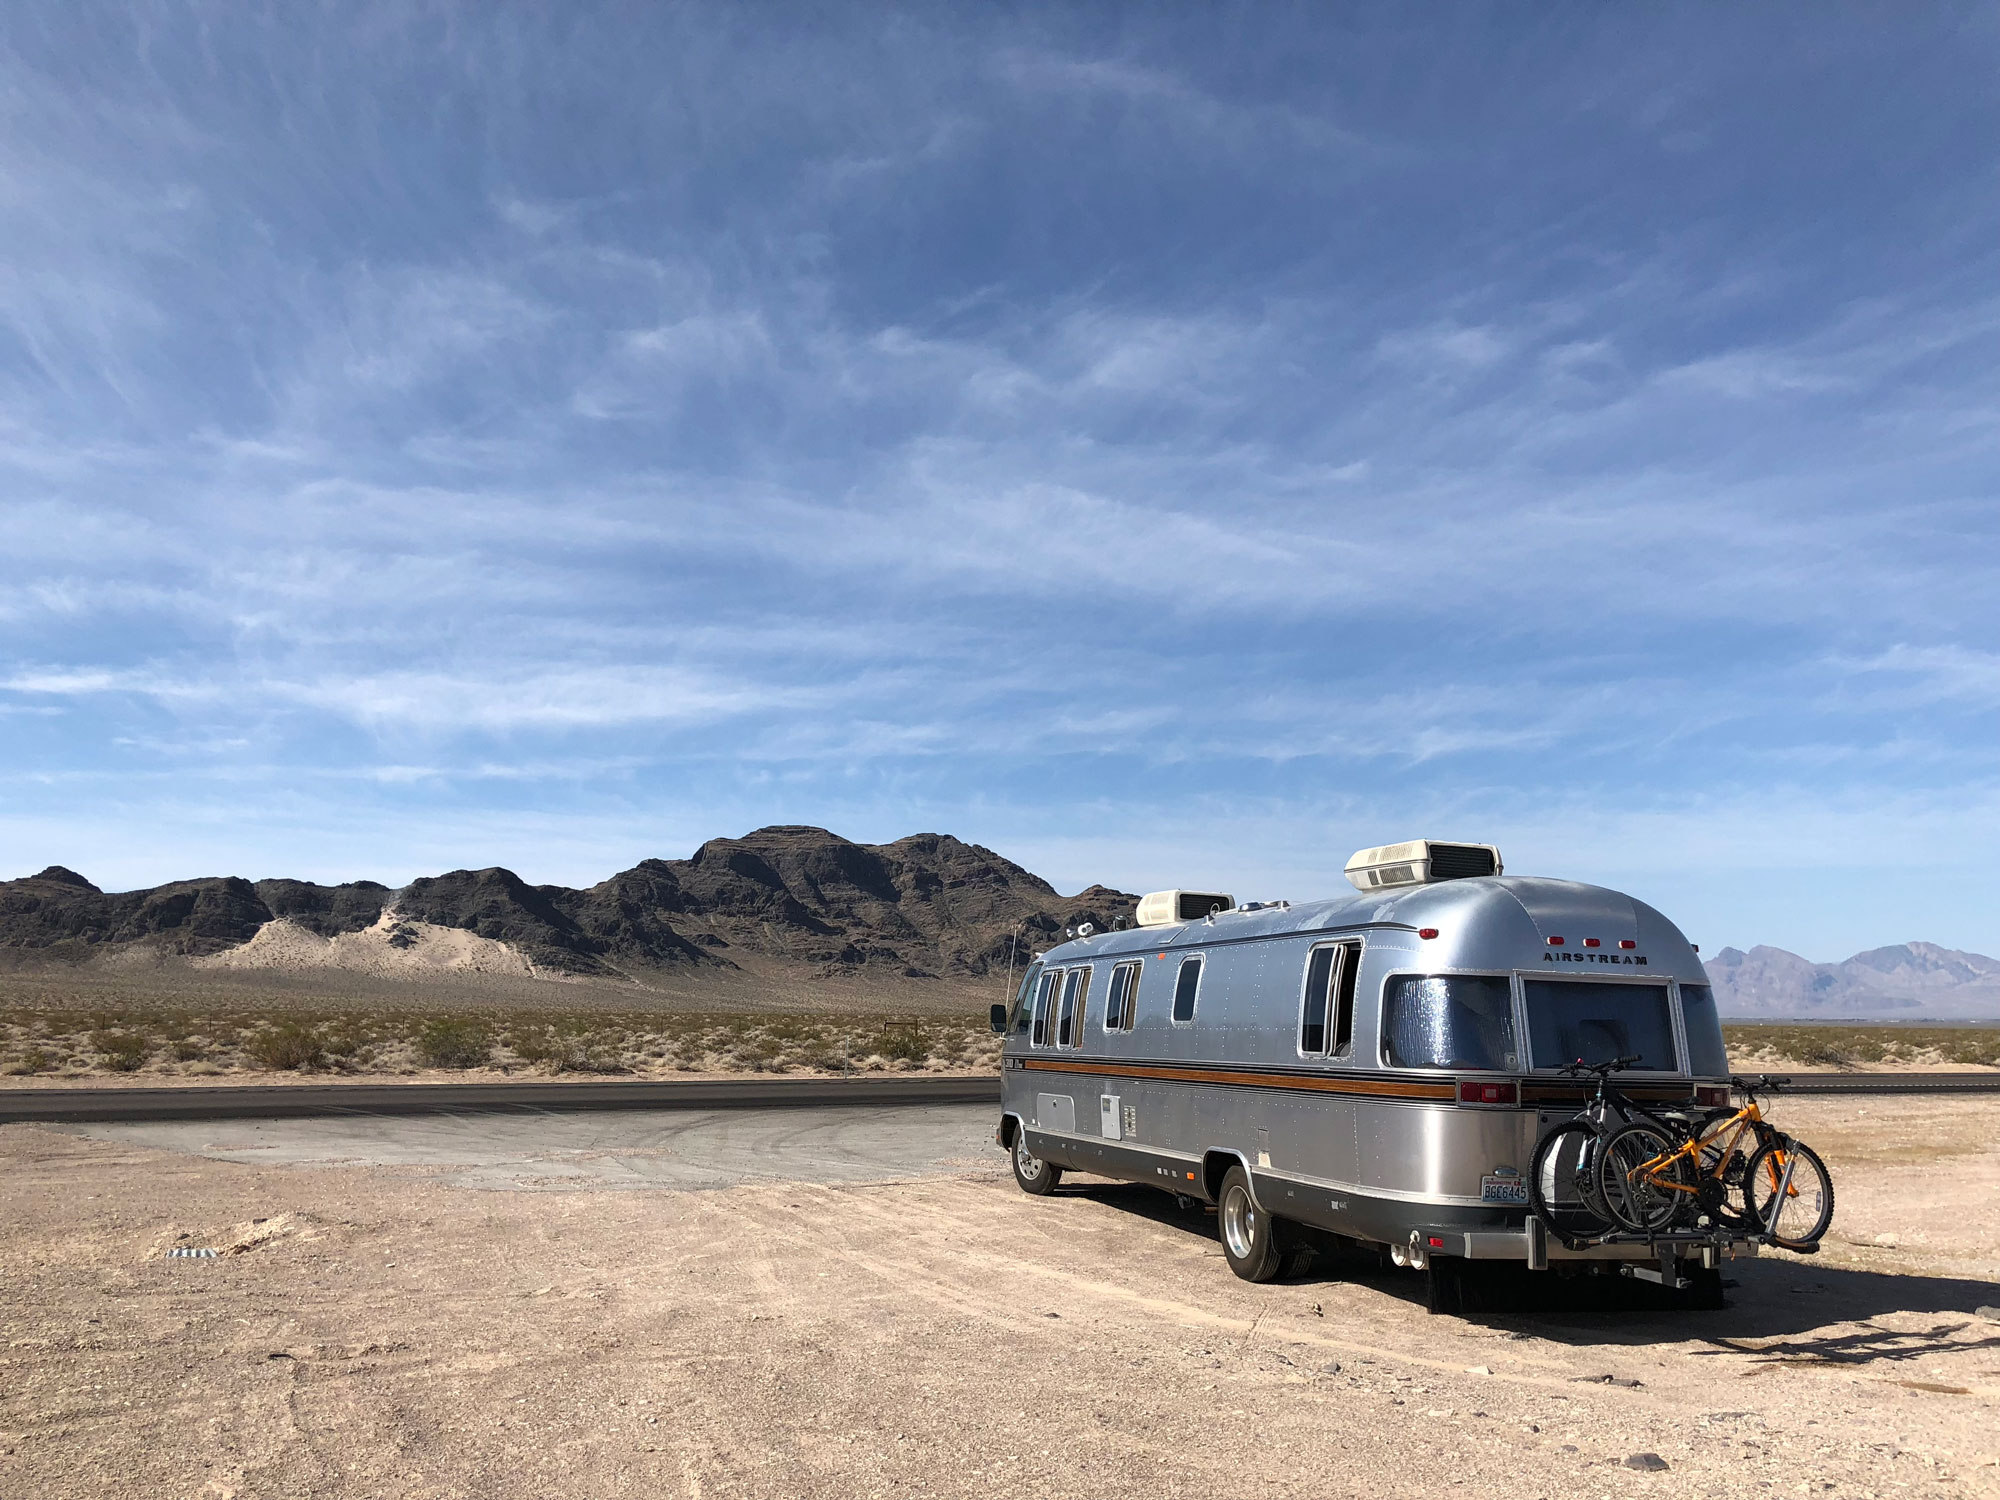 Near Area 51 in Nevada